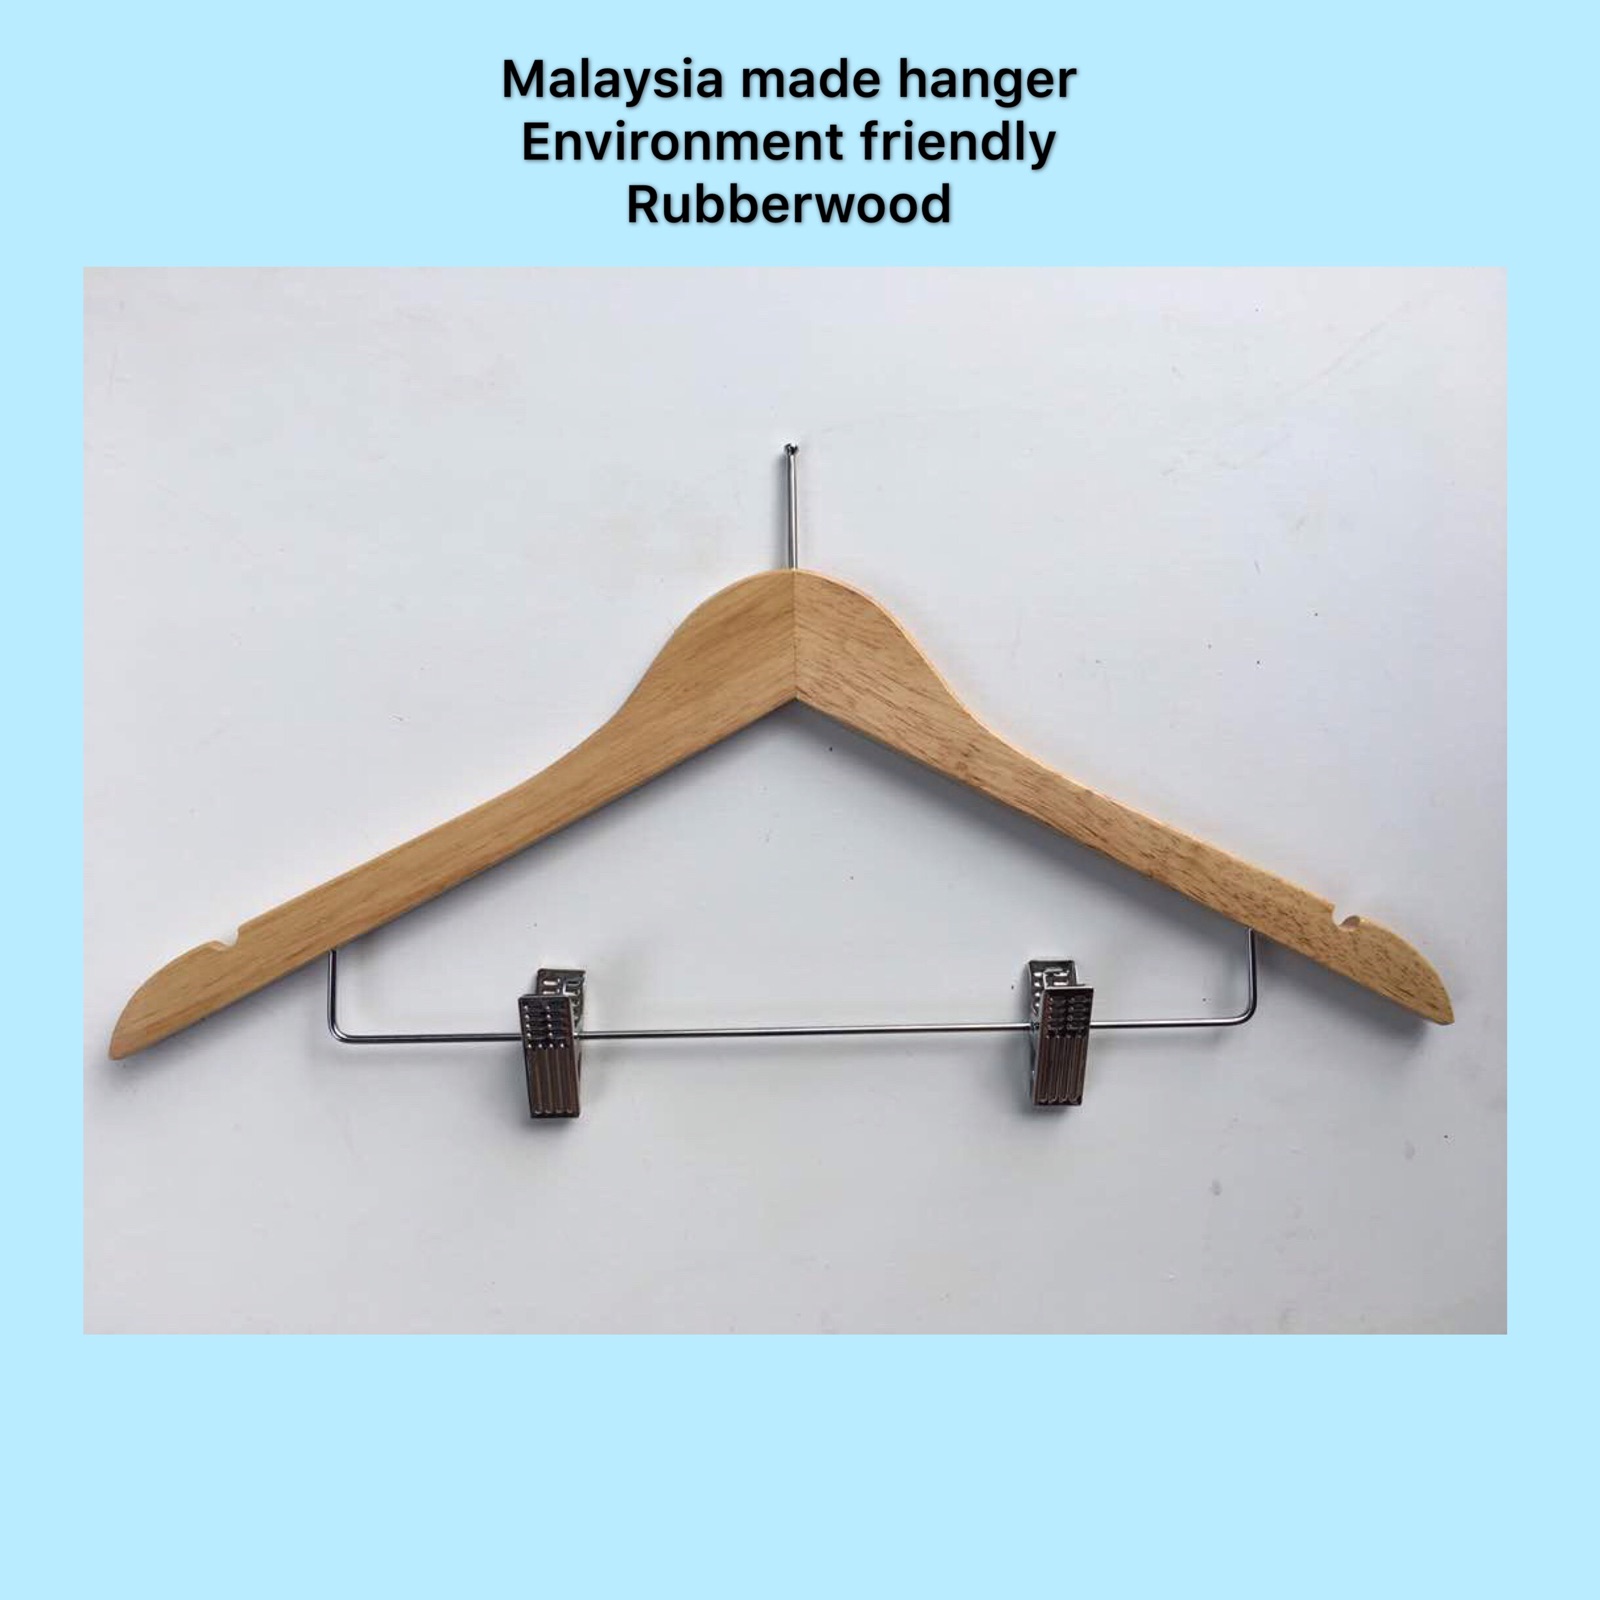 model: 4012  Hanger With Bar